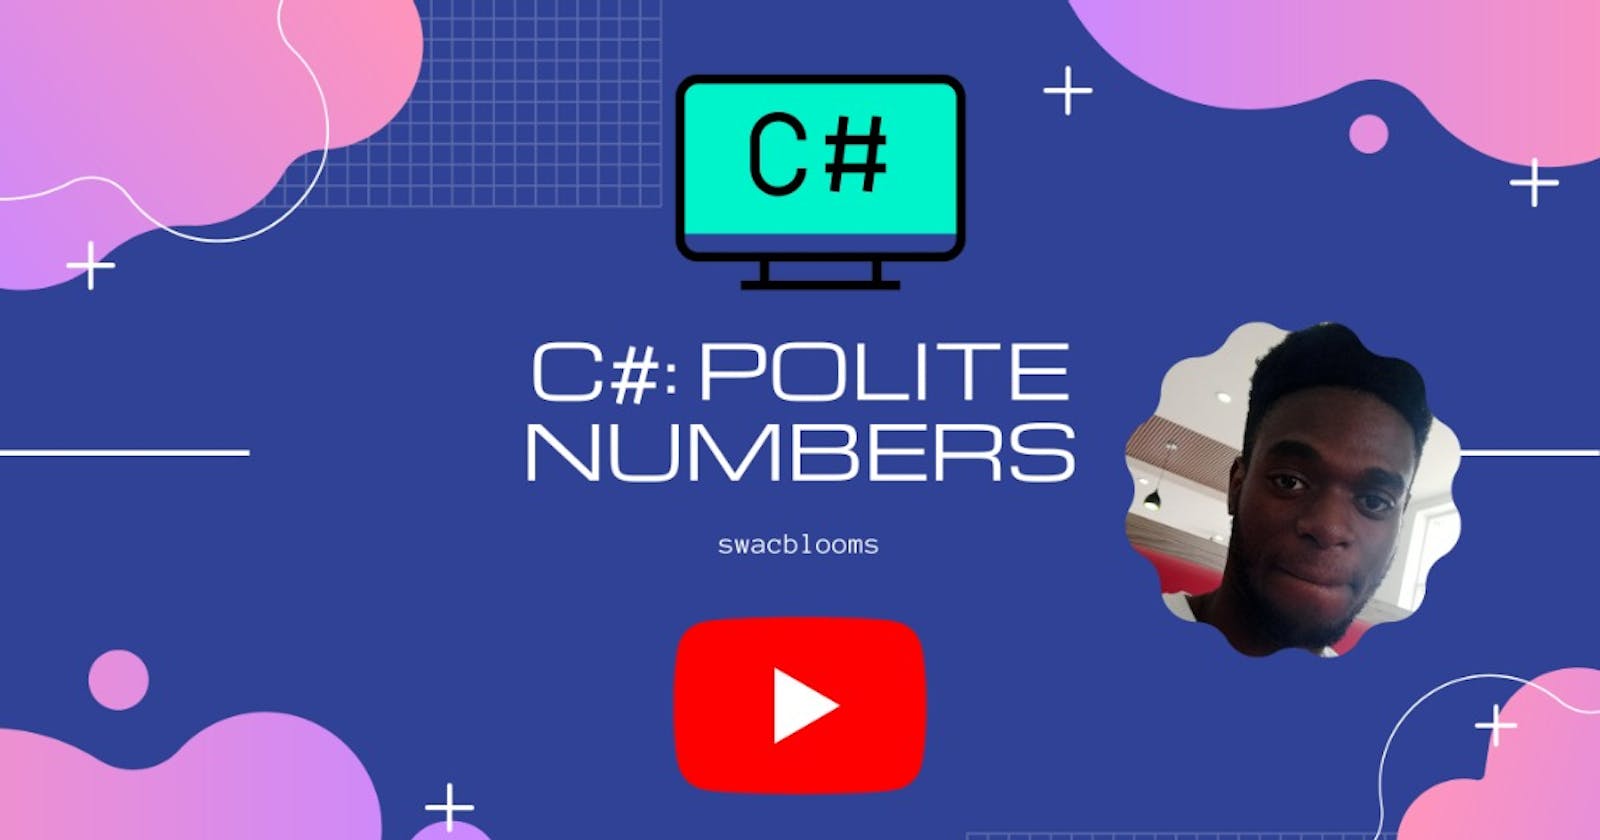 Polite numbers in C#